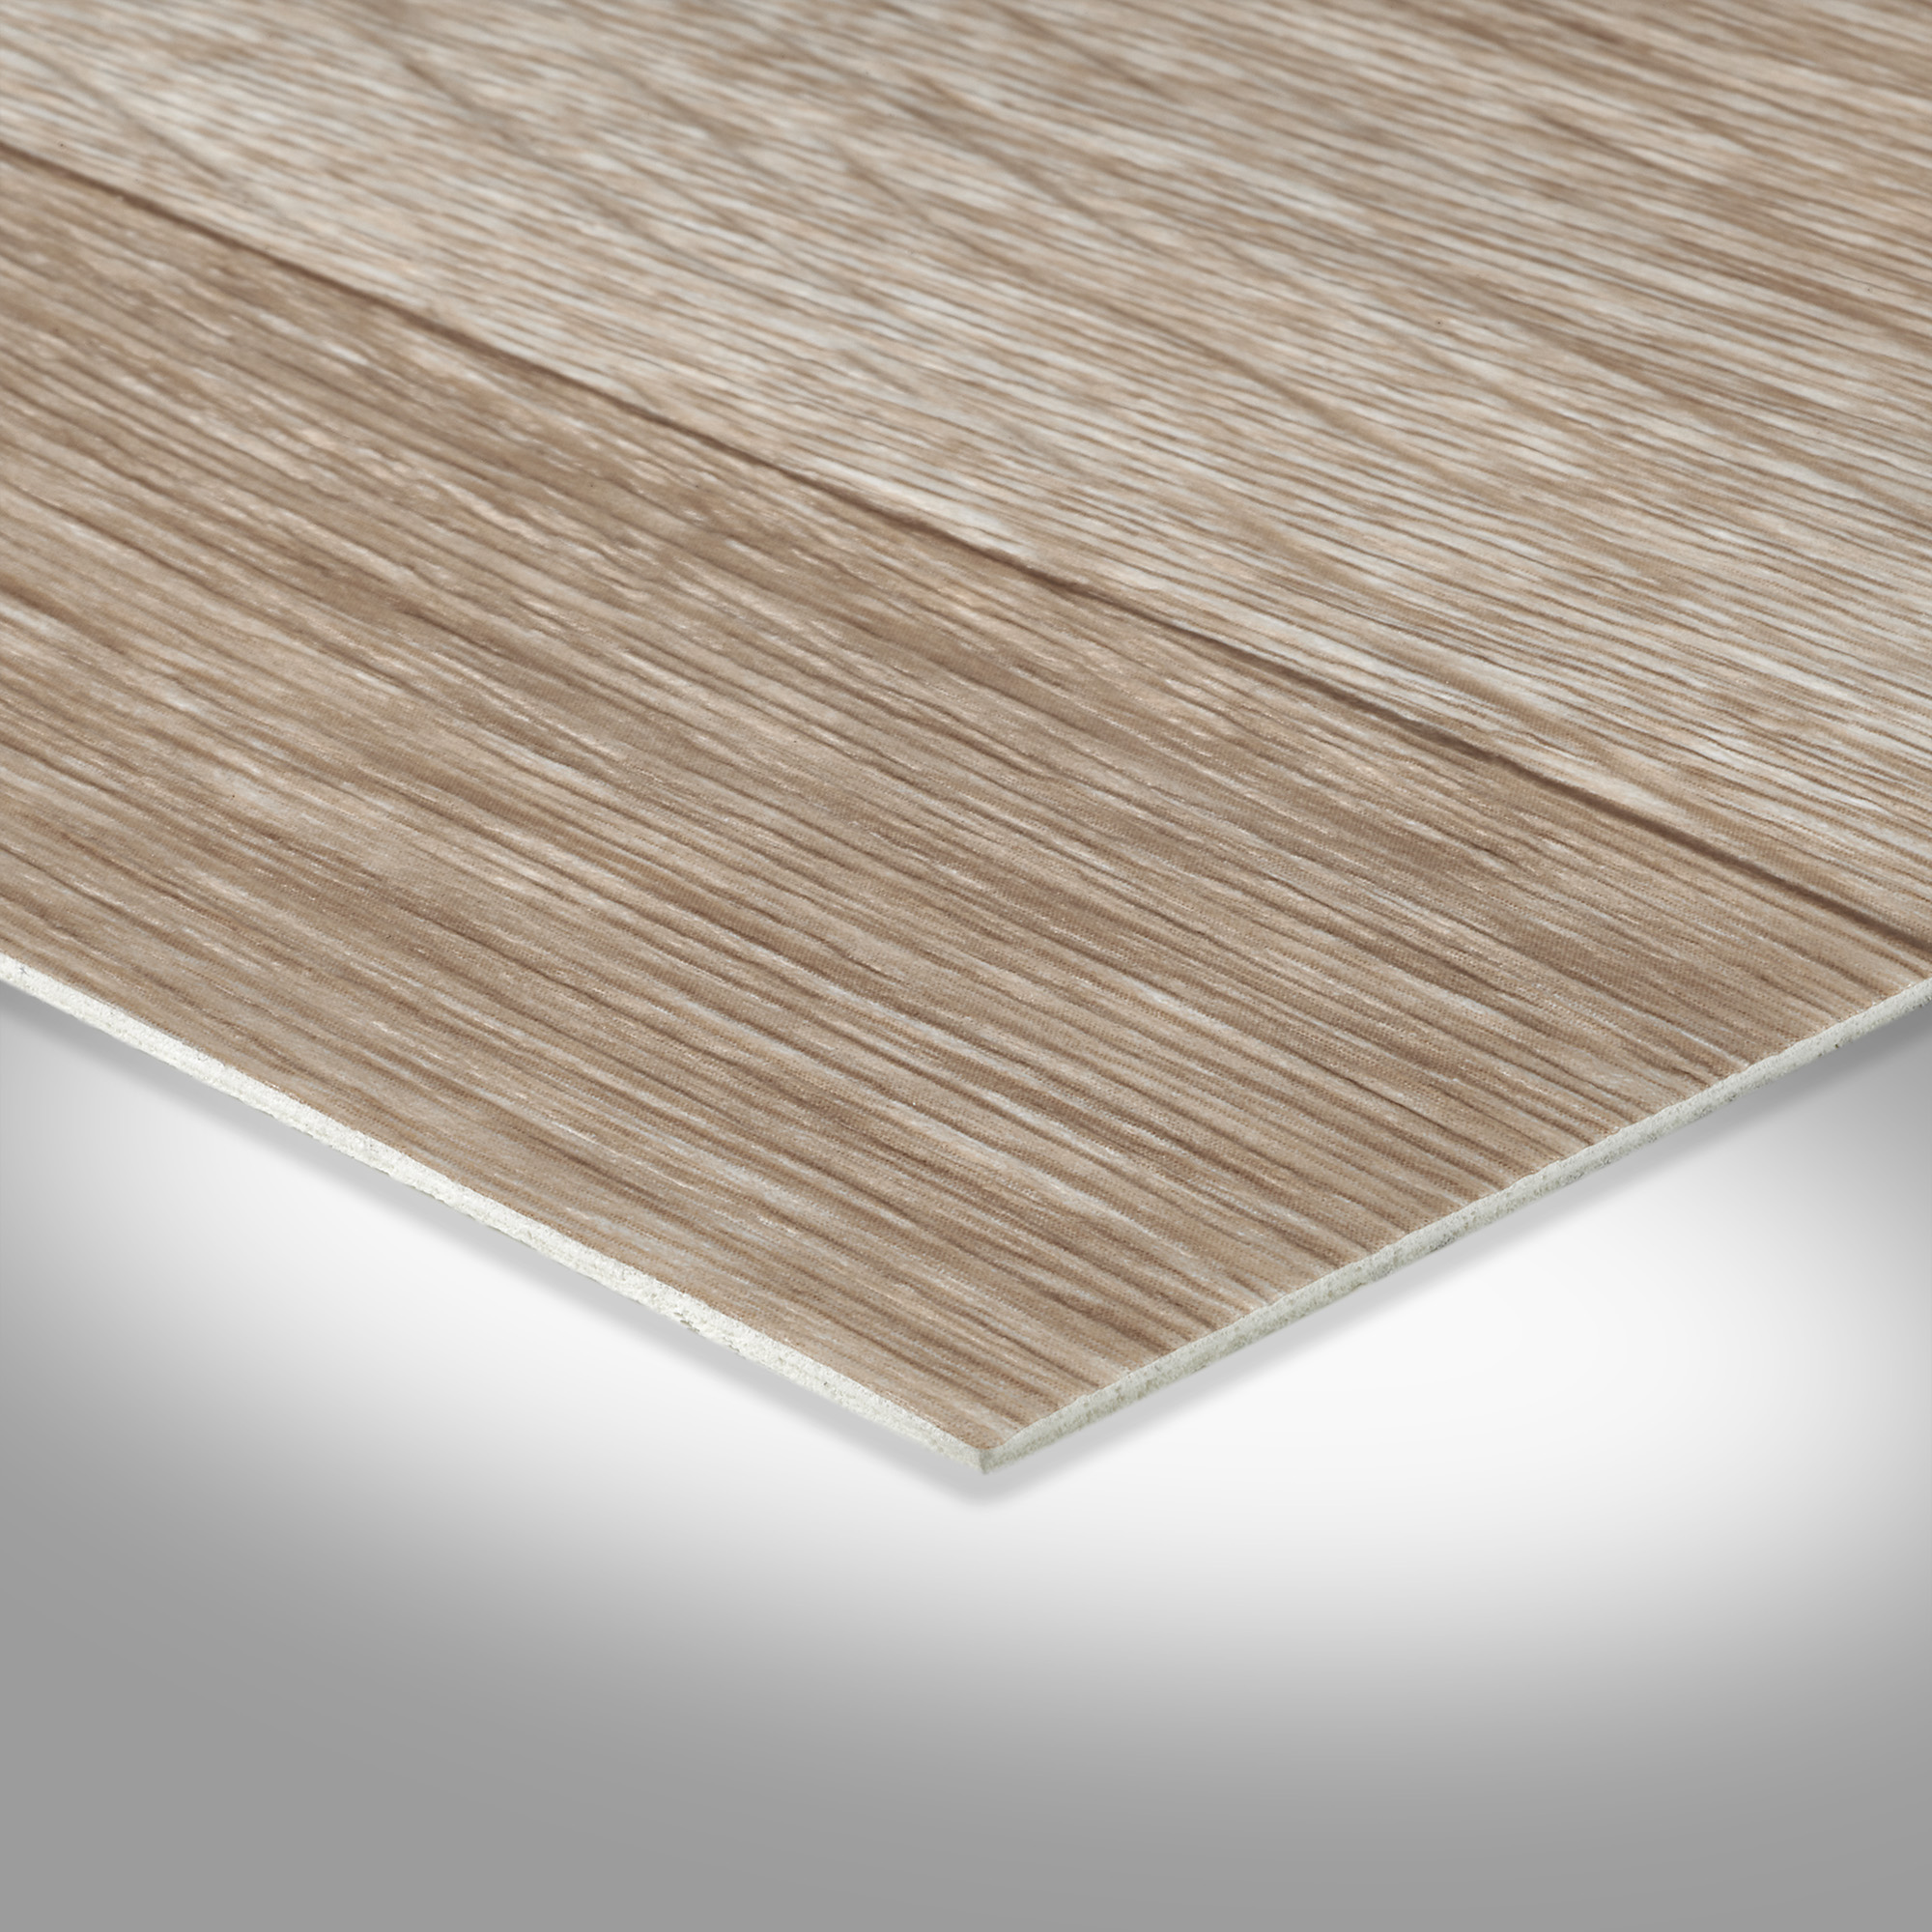 PVC Bodenbelag Vinylboden Meterware Holzoptik, 2m 4m breit, 11,99 - 14,99qm